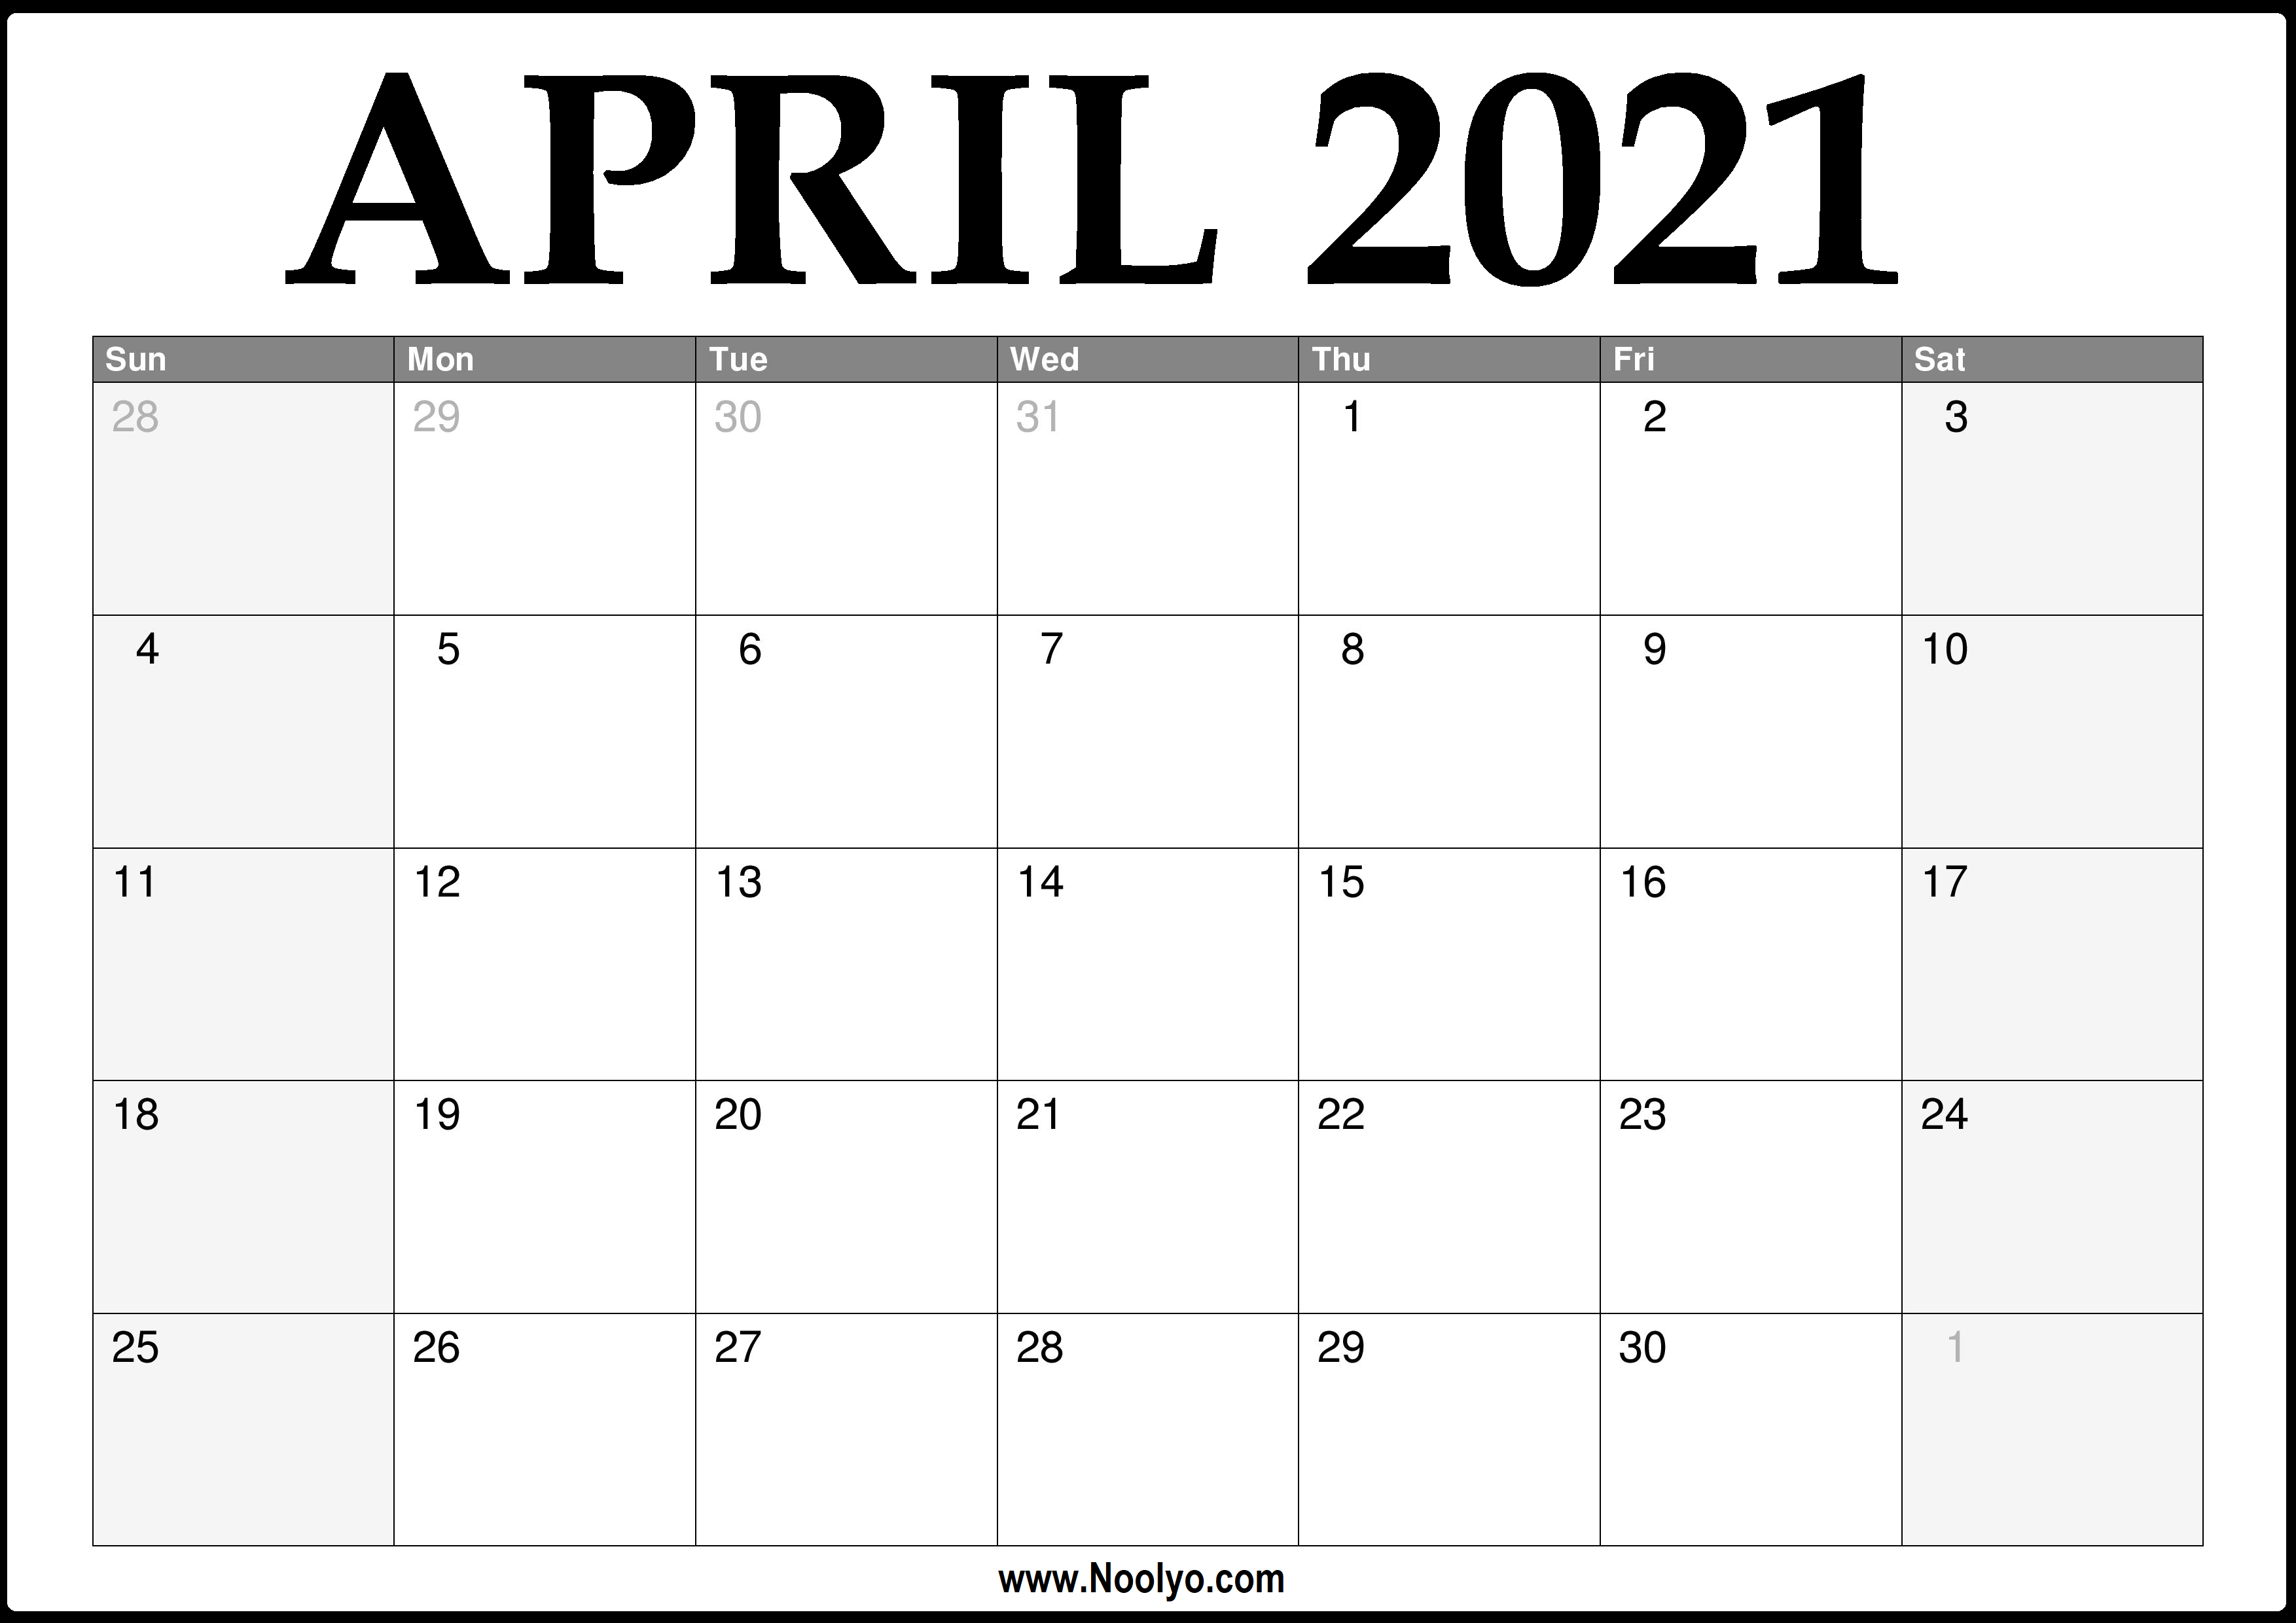 2021 April Calendar Printable - Download Free - Noolyo.com